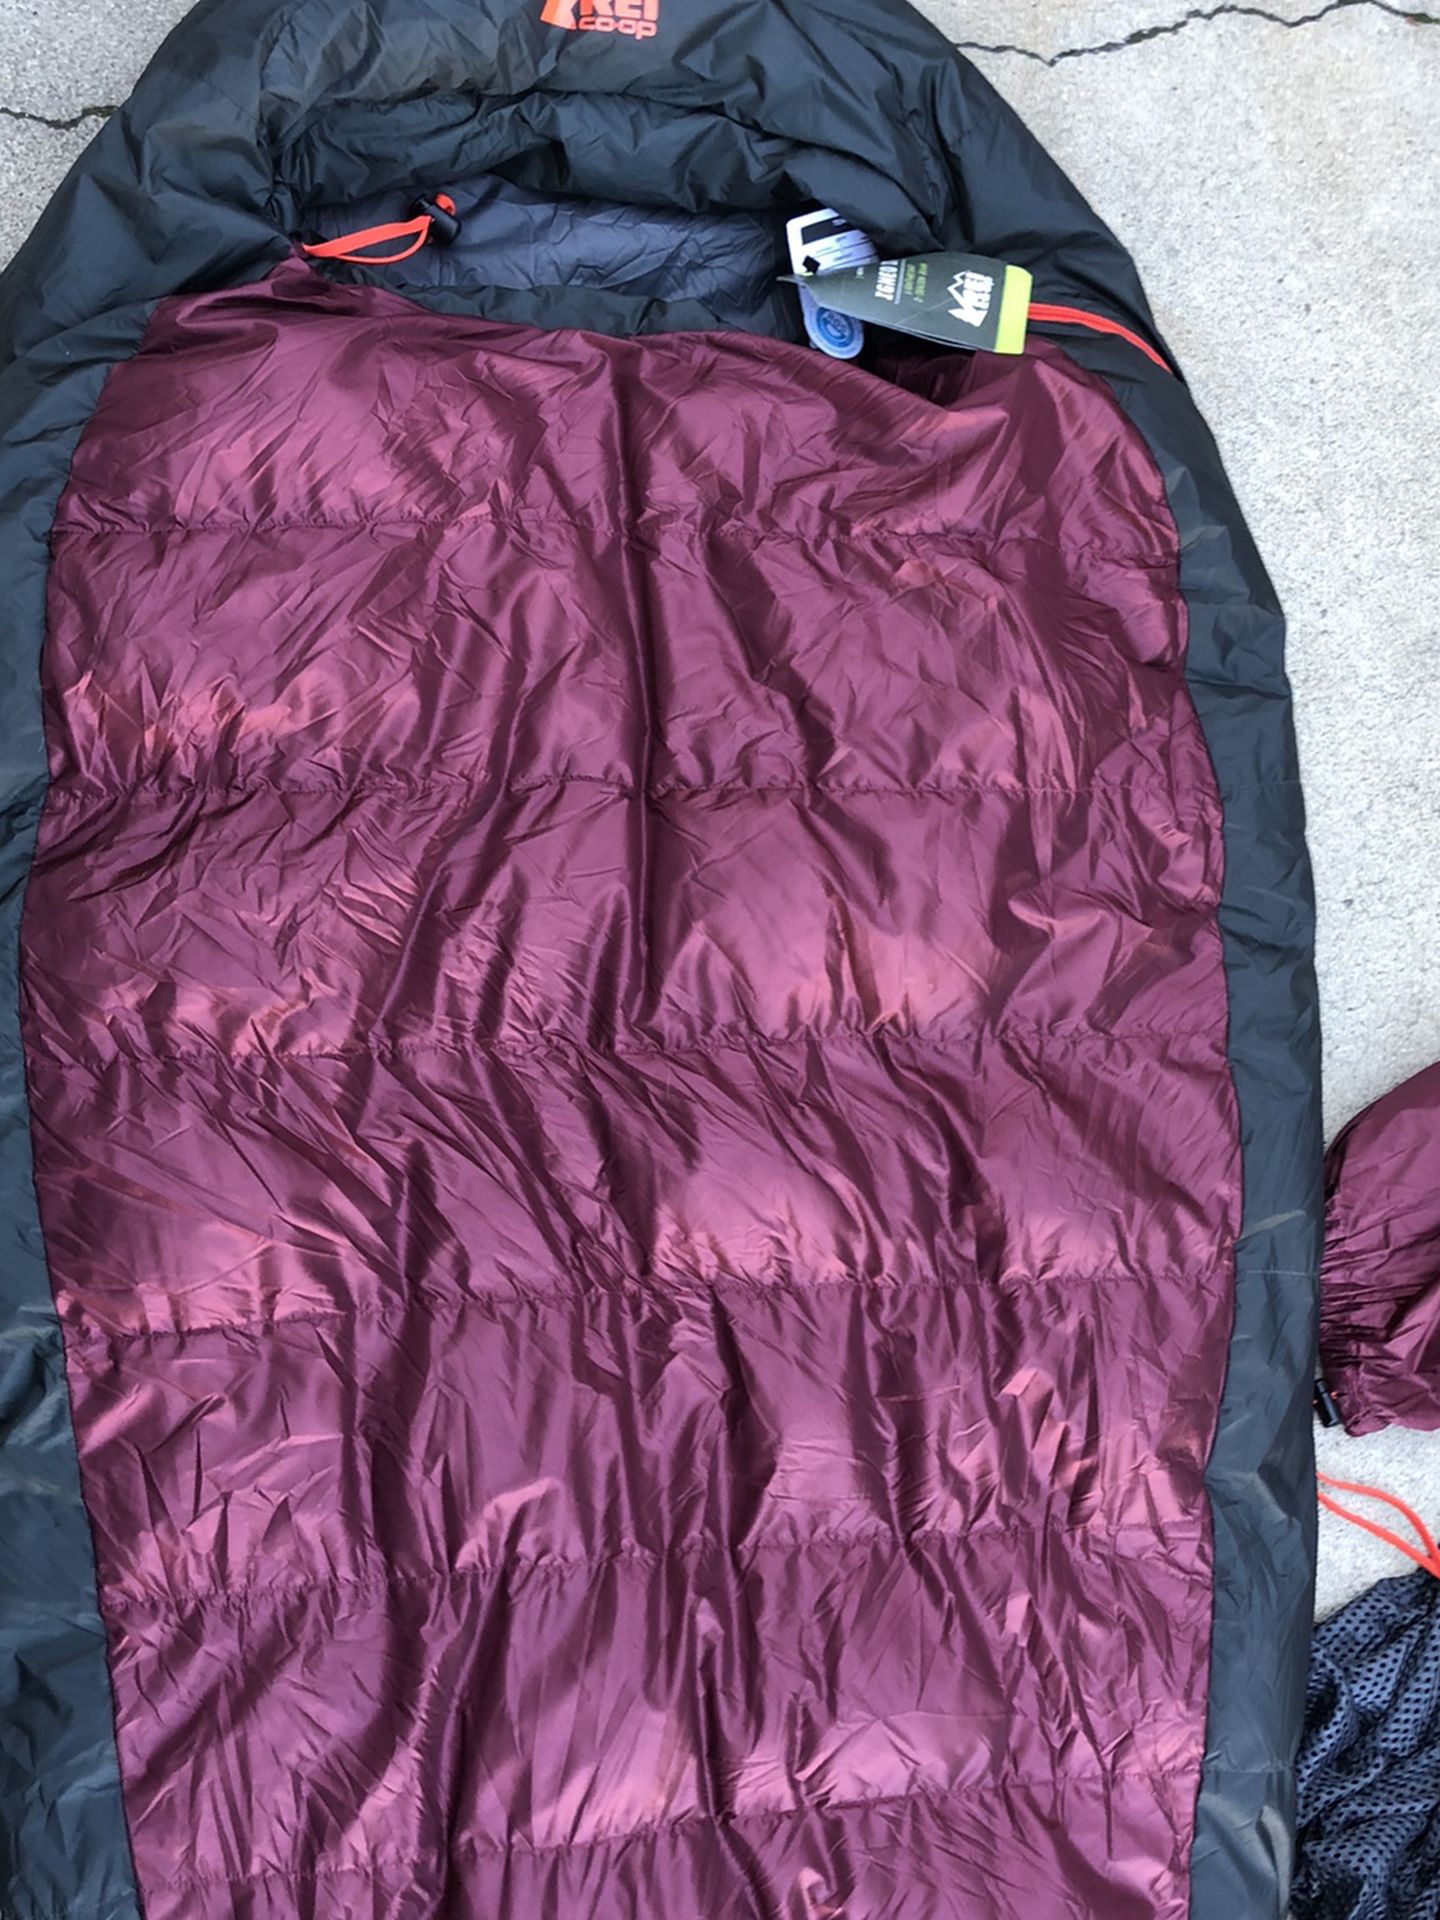 REI, Marmot, The North Face, Mountain Hardwear , Down Sleeping Bag Nwt